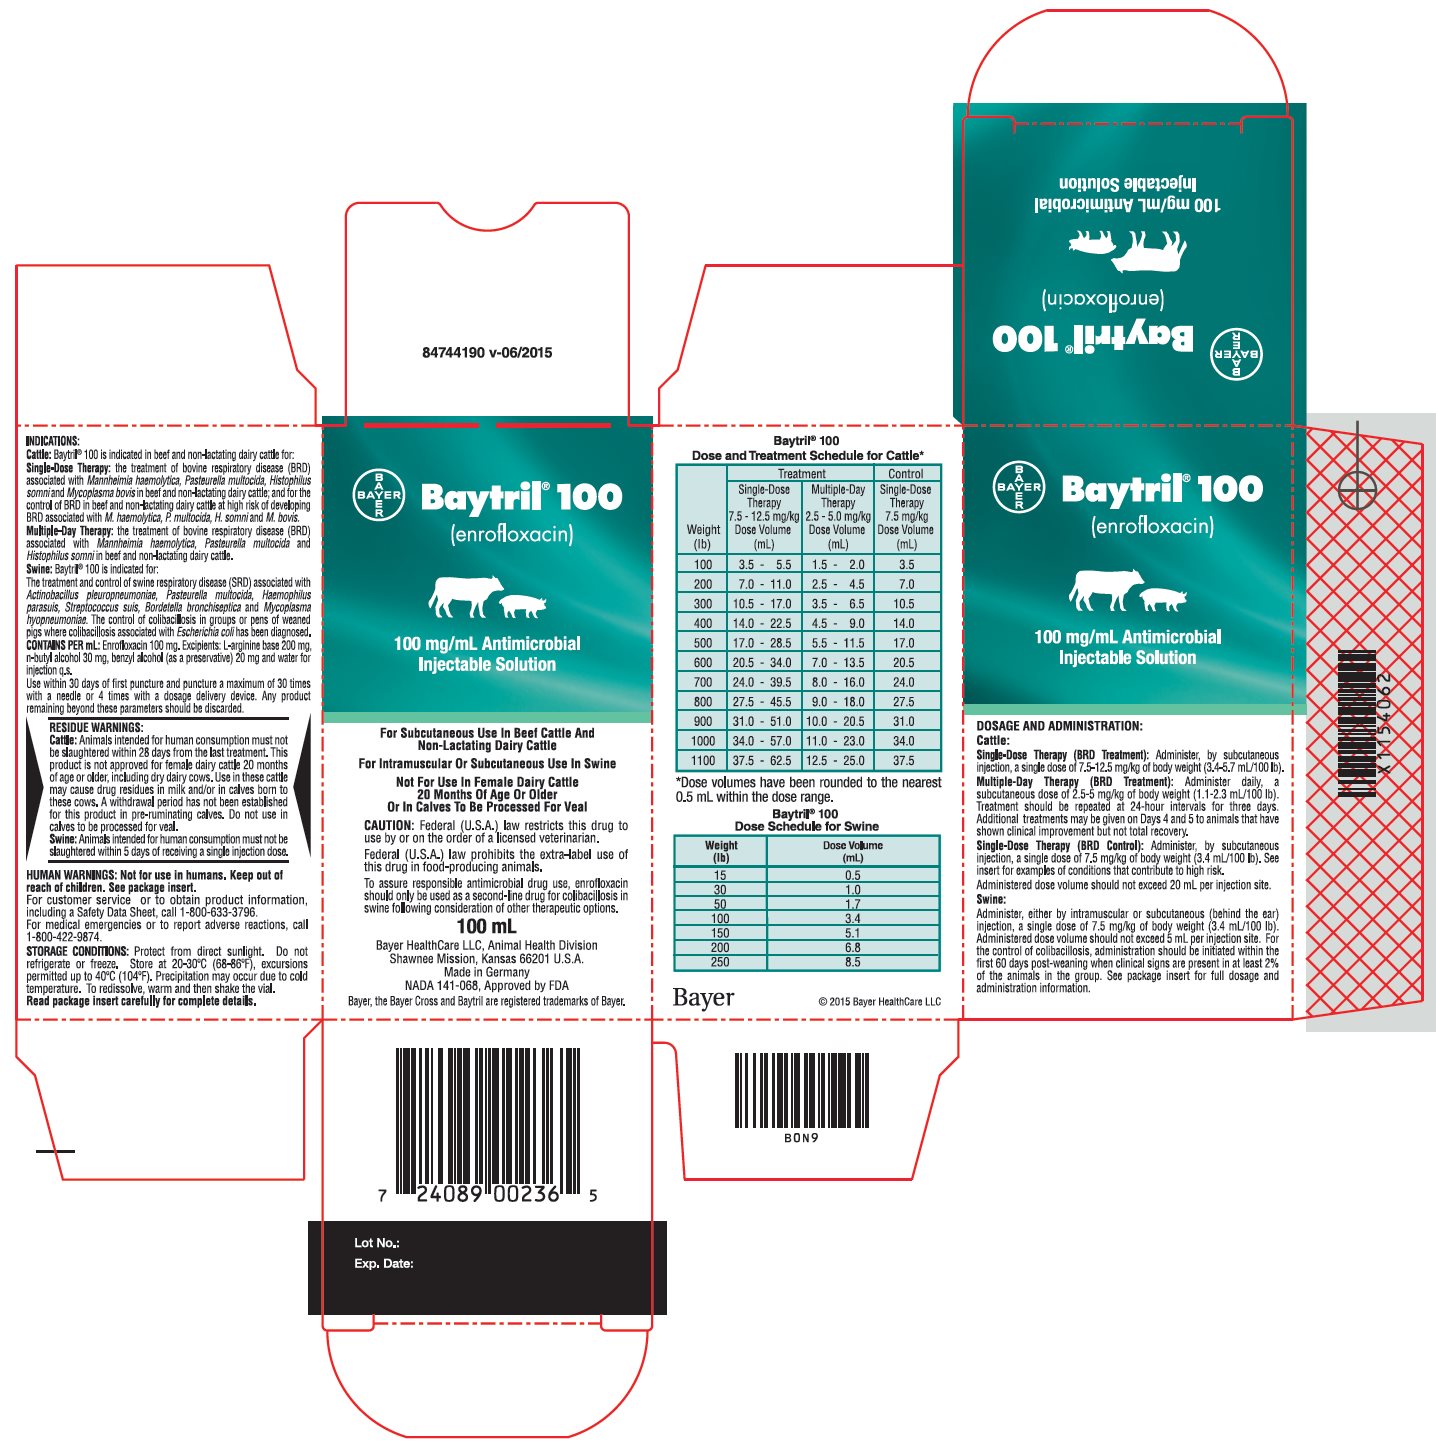 Baytril 100 (enrofloxacin) 100 mg/mL Antimicrobial Injectable Solution 100 mL Carton Label